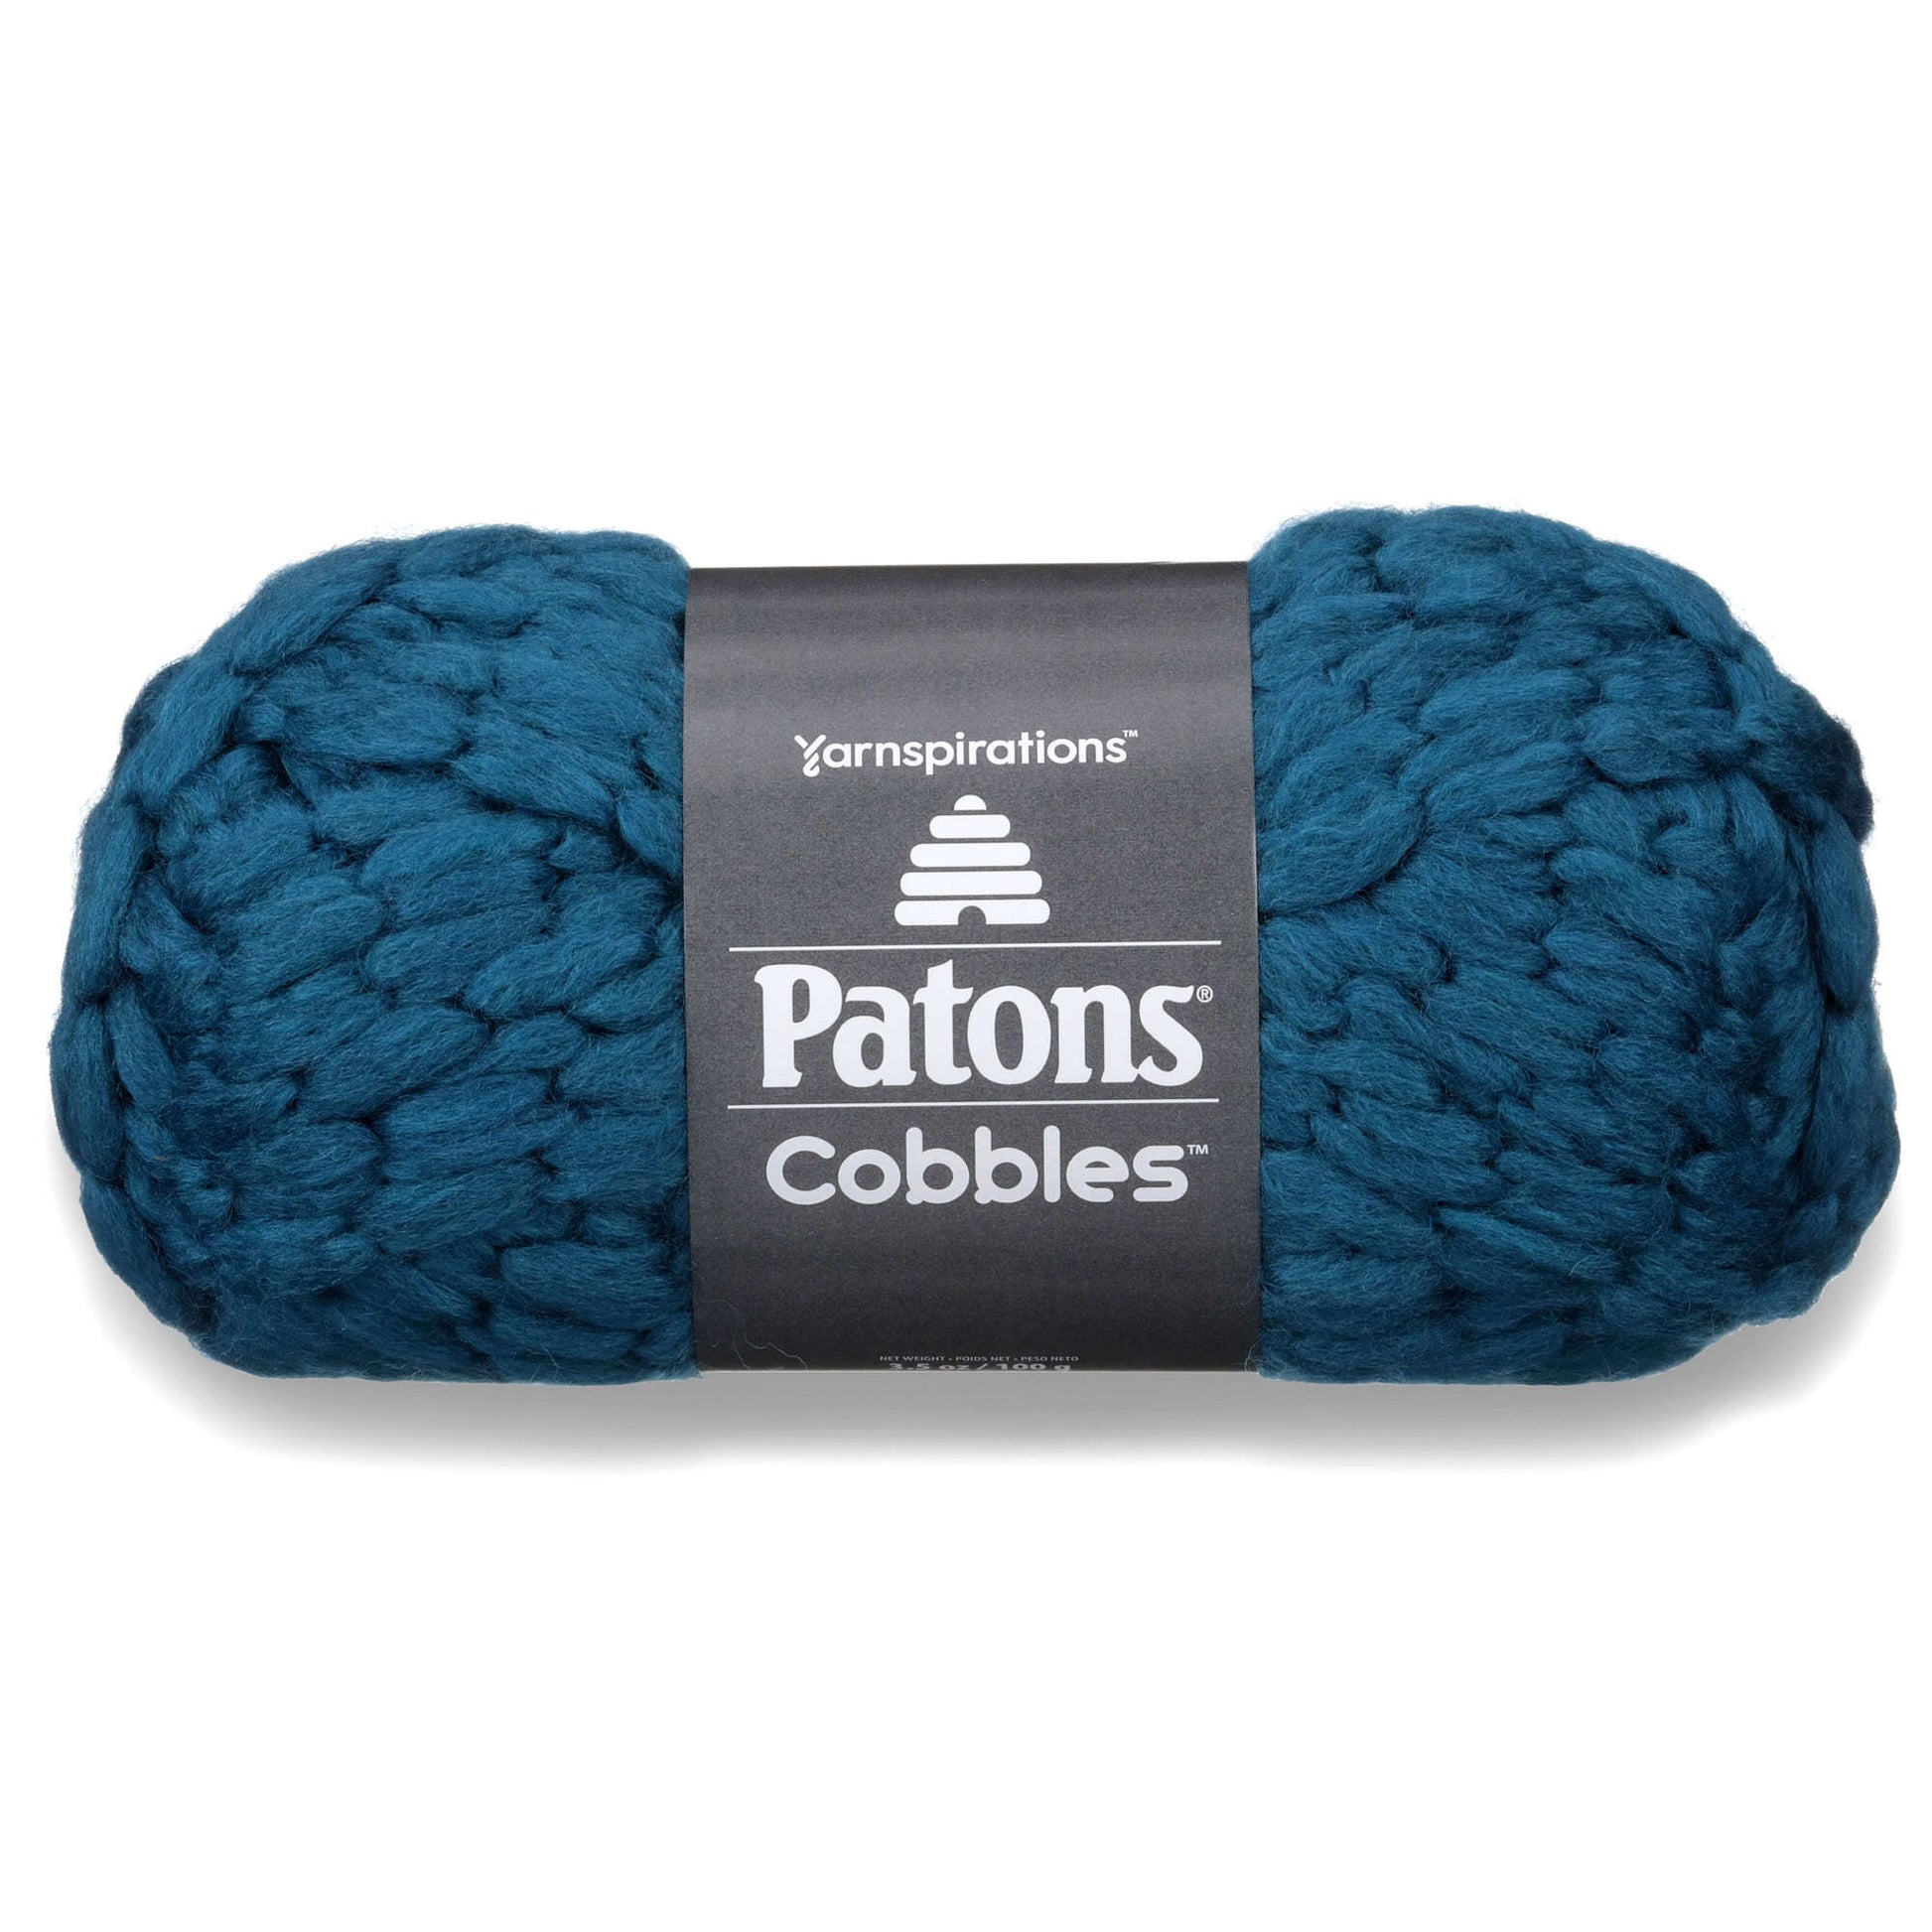 Patons Cobbles Yarn - Discontinued Shades